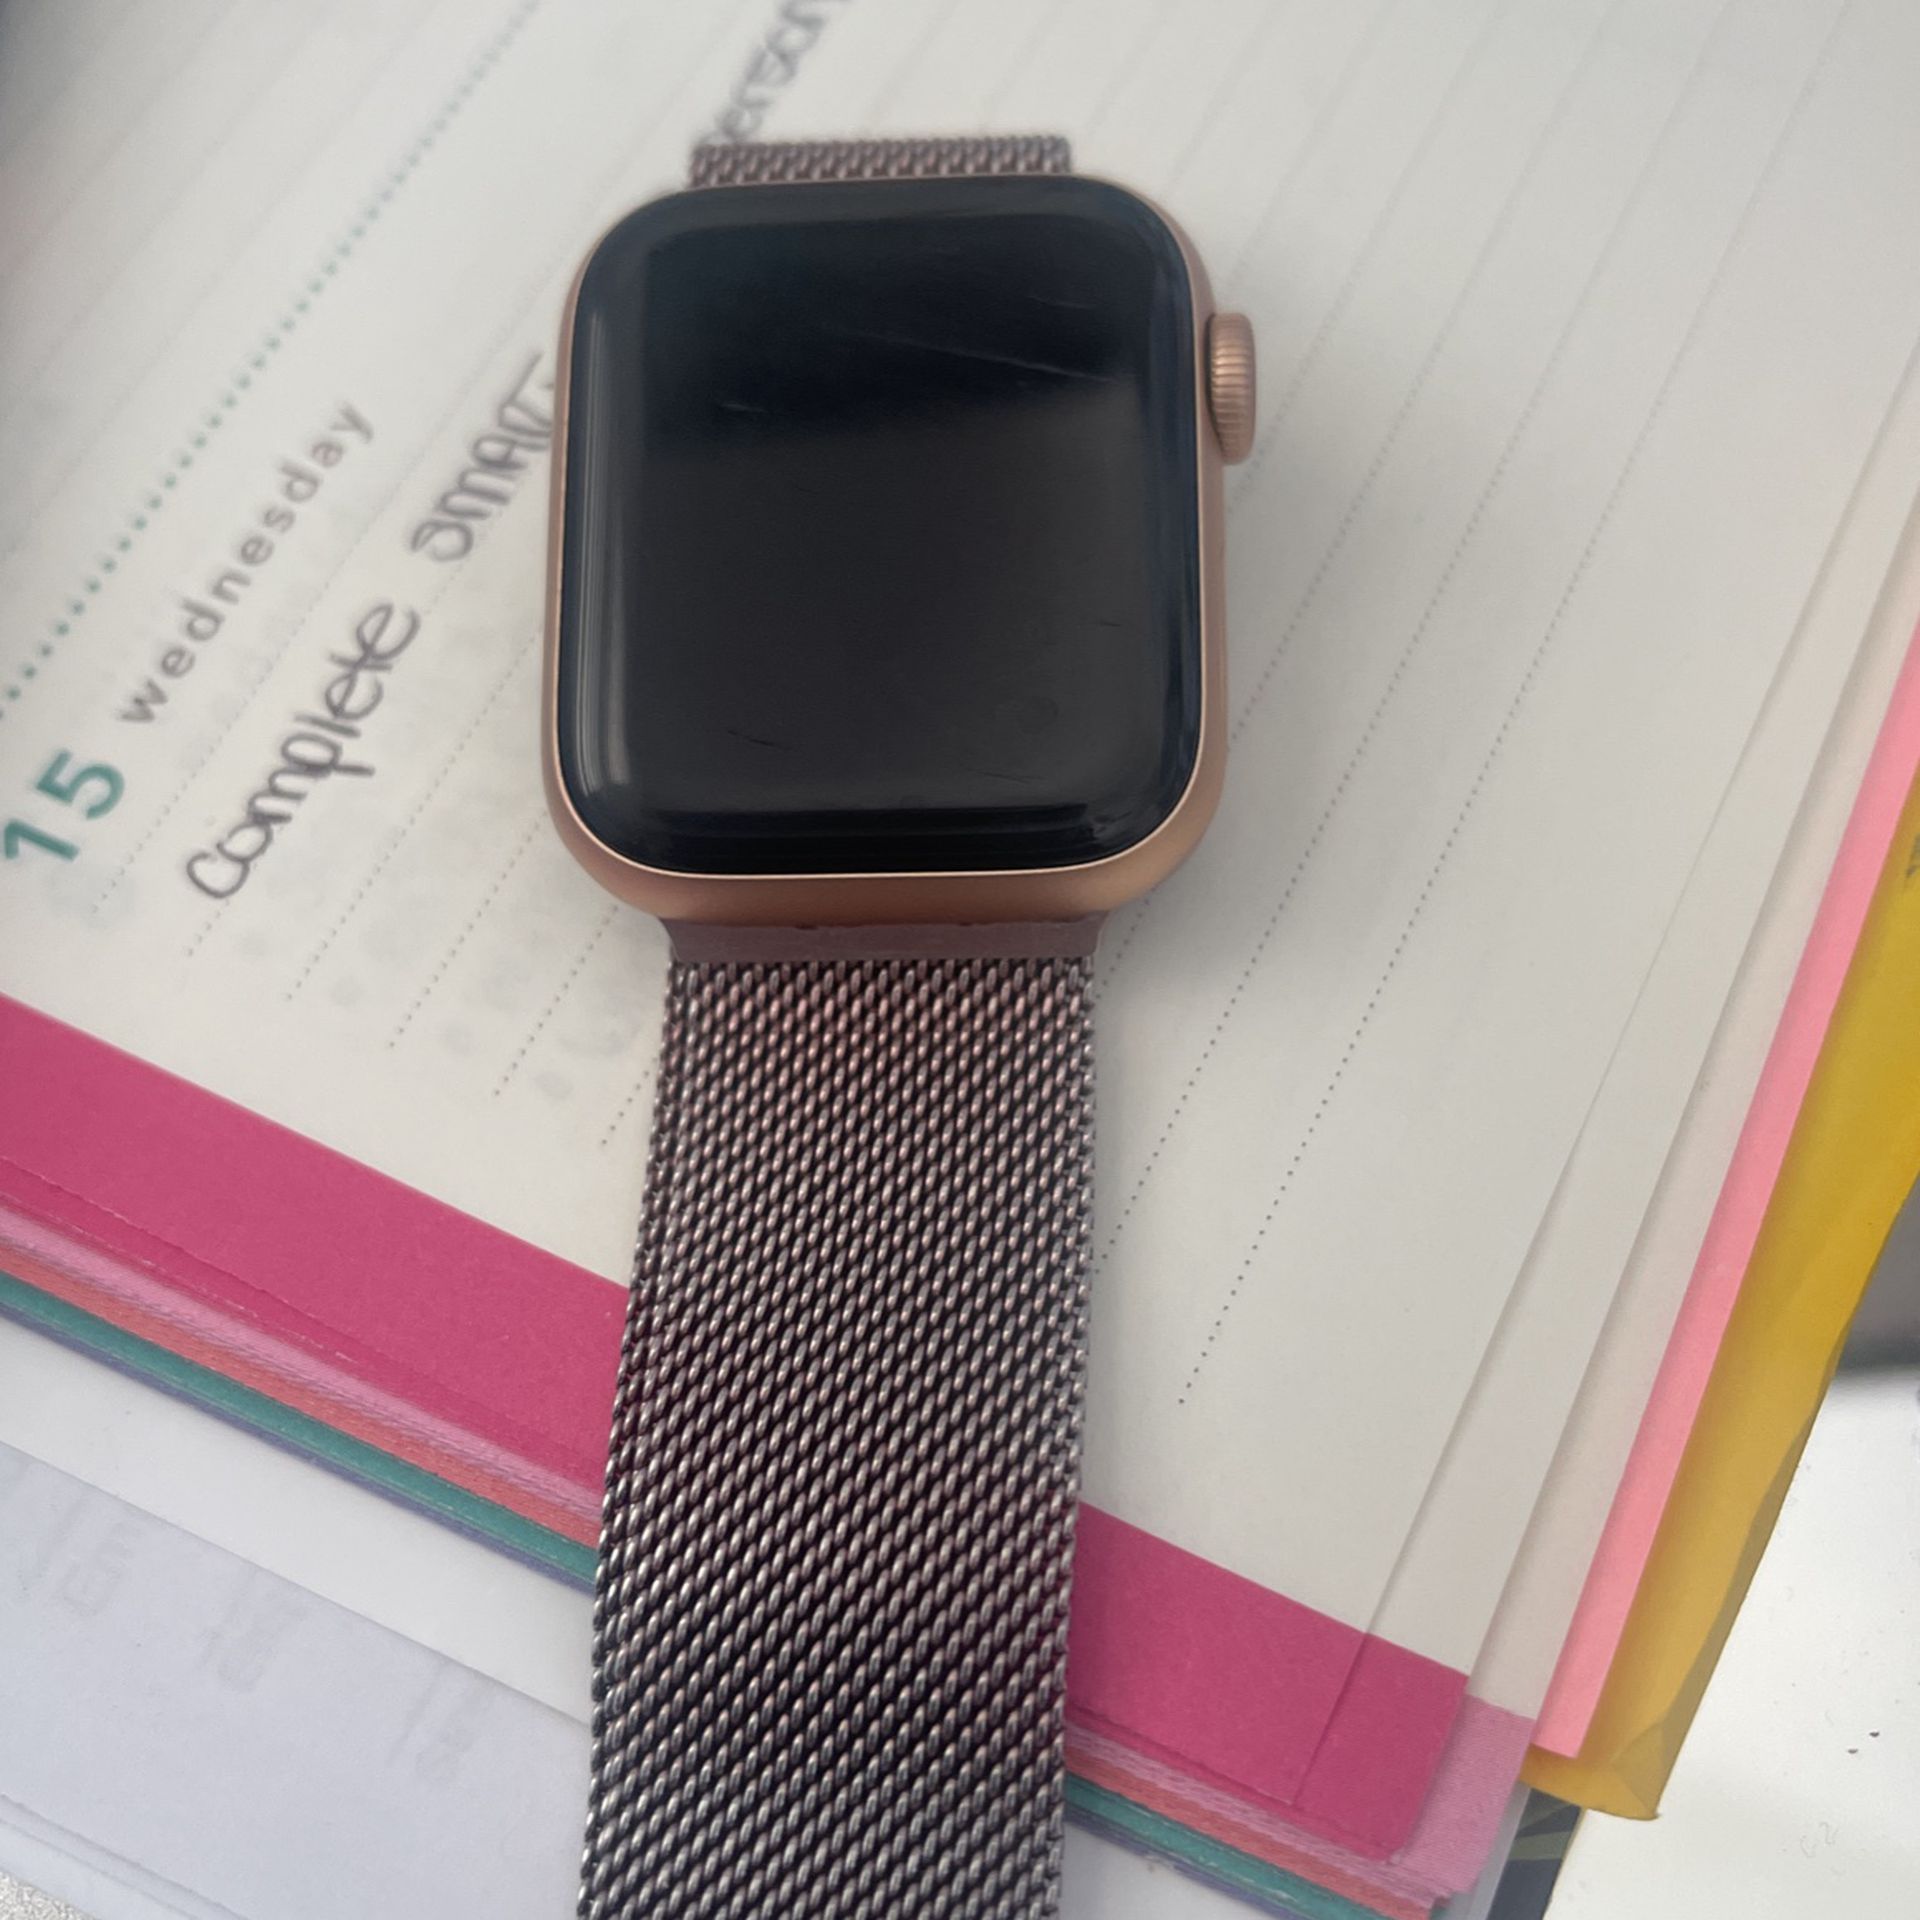 Apple Watch (Rose Gold)